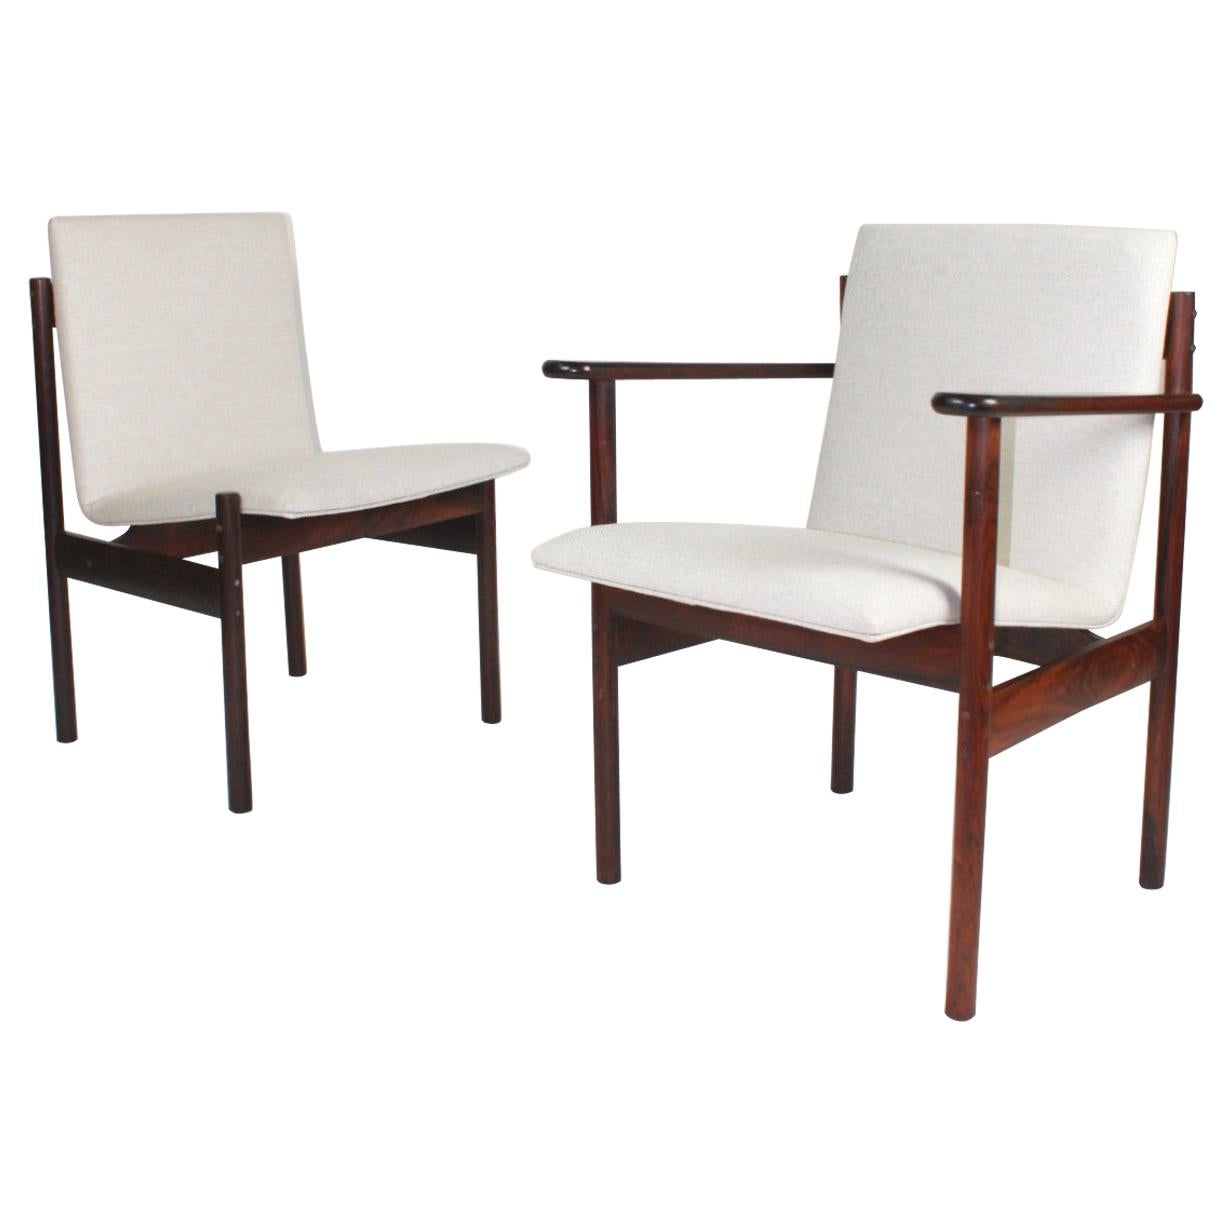 Rosewood Chairs by Sven Ivar Dysthe for Dokka Møbler, set of 4